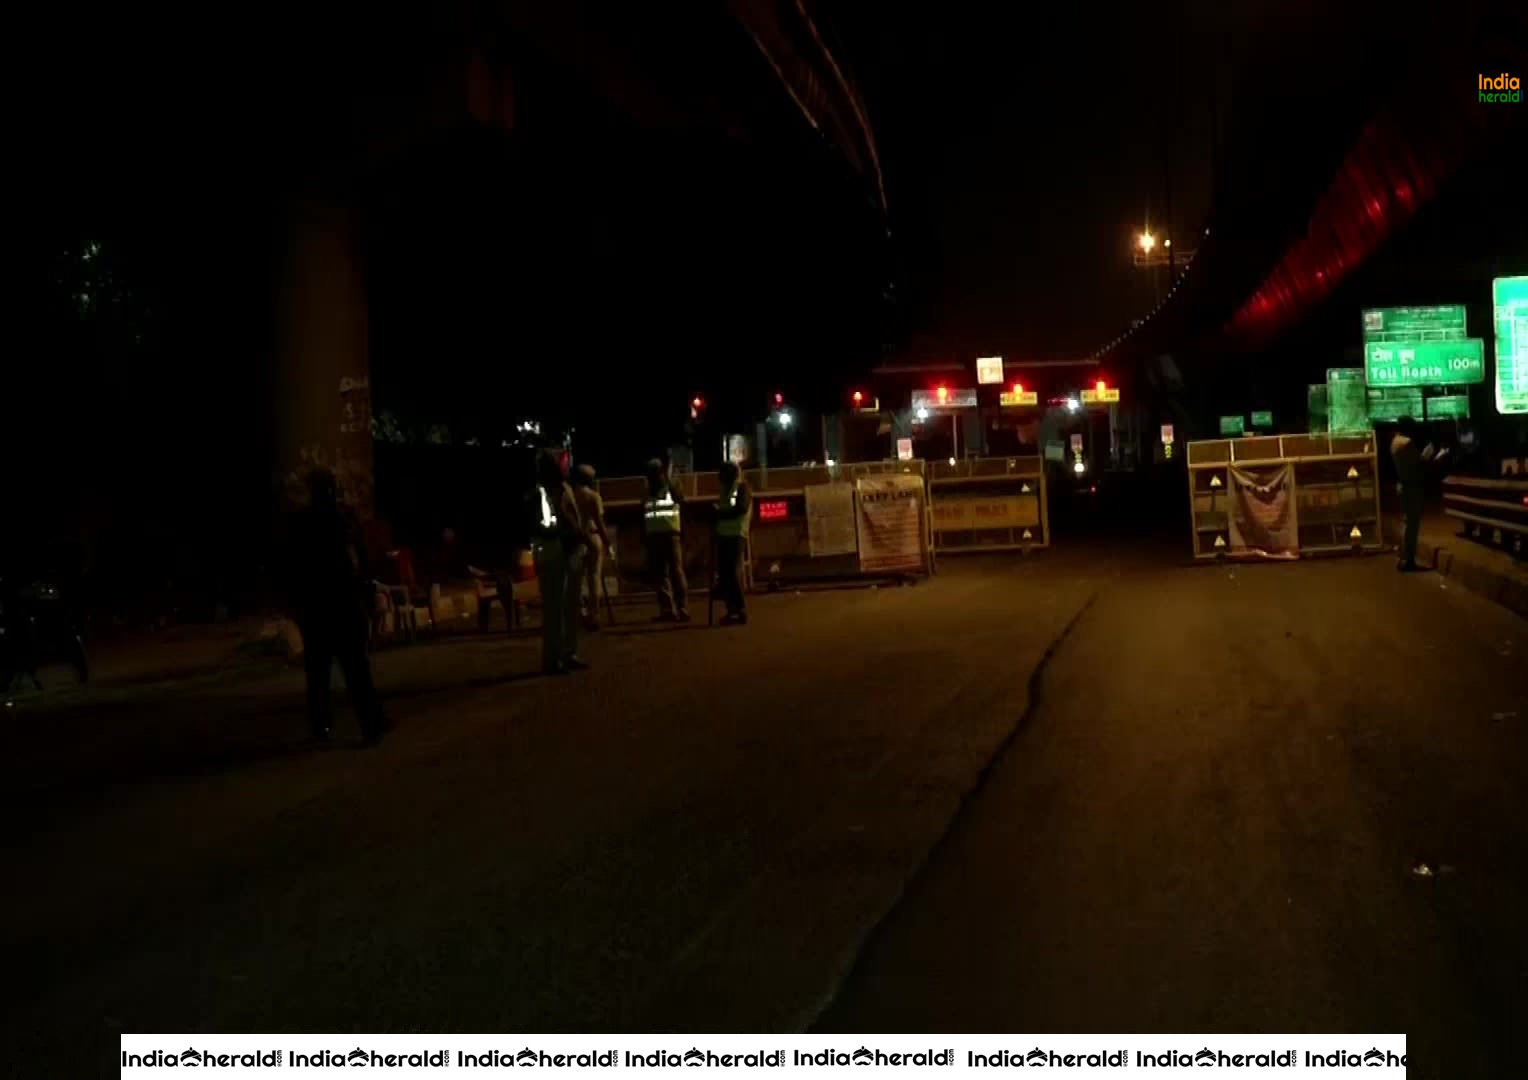 Police barricading continues at Faridabad border to stop movement of vehicles due to Corona Virus Lockdown